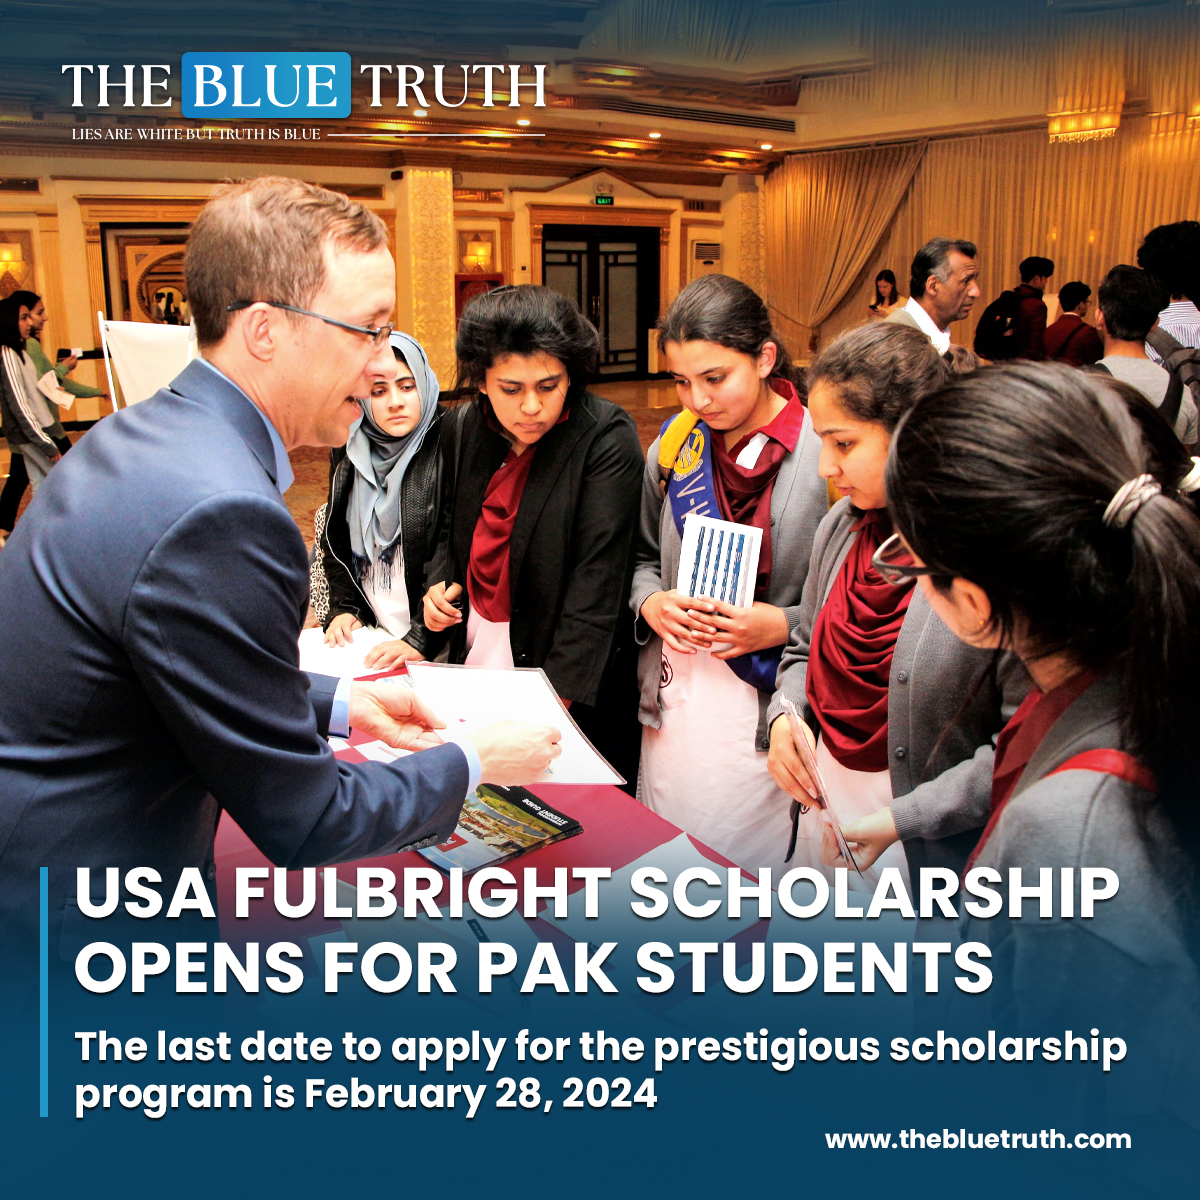 US Fulbright scholarship program opens for Pak students.
The last date to apply for the prestigious scholarship program is February 28, 2024.

#USEFP #FulbrightStudentProgram #EducationalExchange #ScholarshipOpportunity #GraduateStudies #tbt #TheBlueTruth